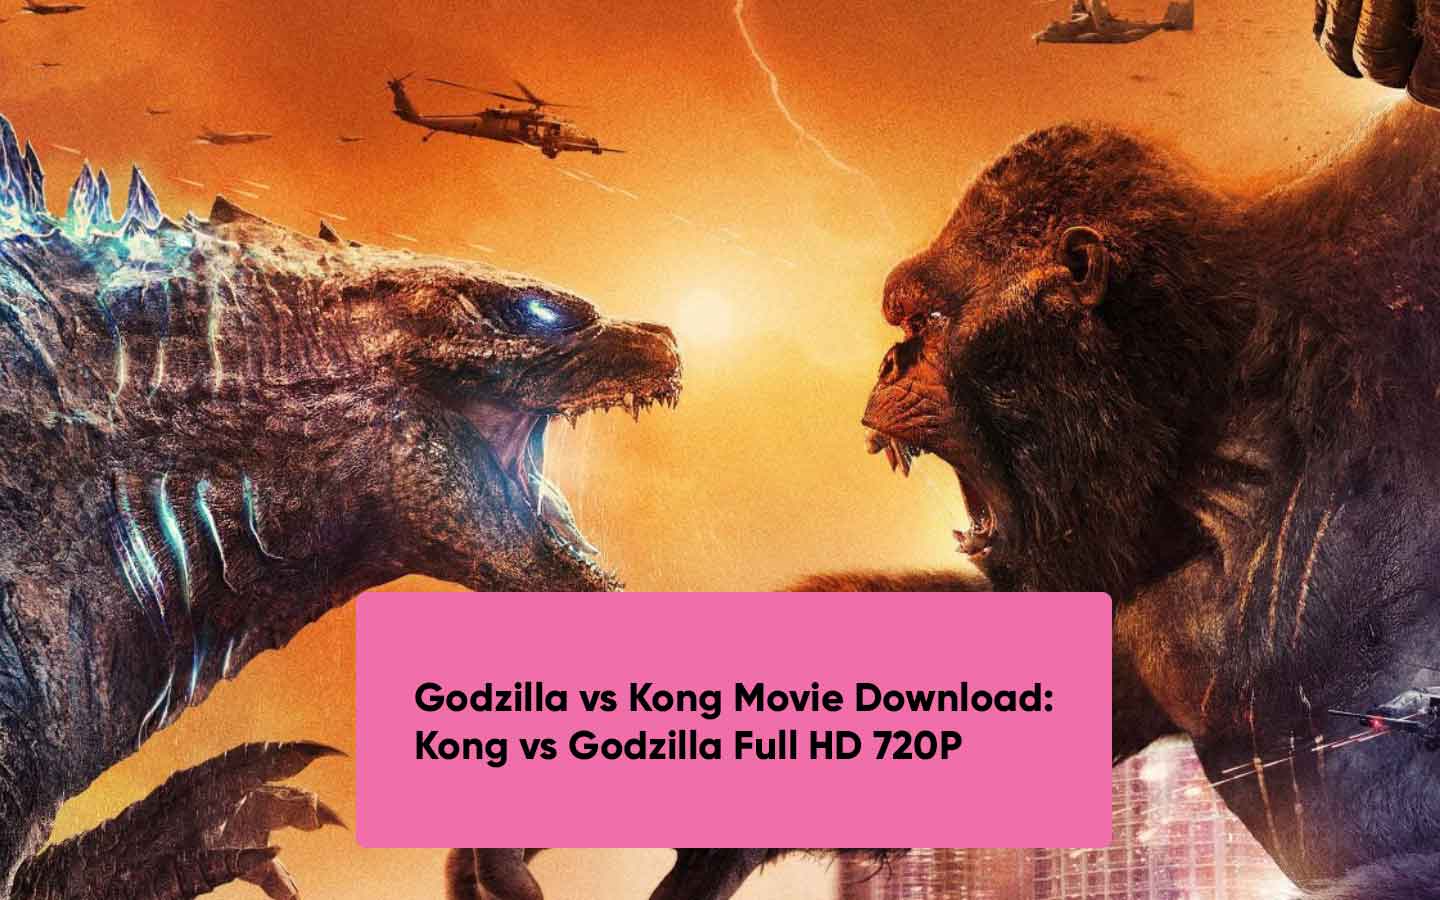 Godzilla full movie. Годзилла против гонка. Конг против волка и крокодила. Годзилла 1998 года в влюбилась в Годзилла 2014 года. Годзилла 1998 года в влюбилась в Годзиллу 2014 года.